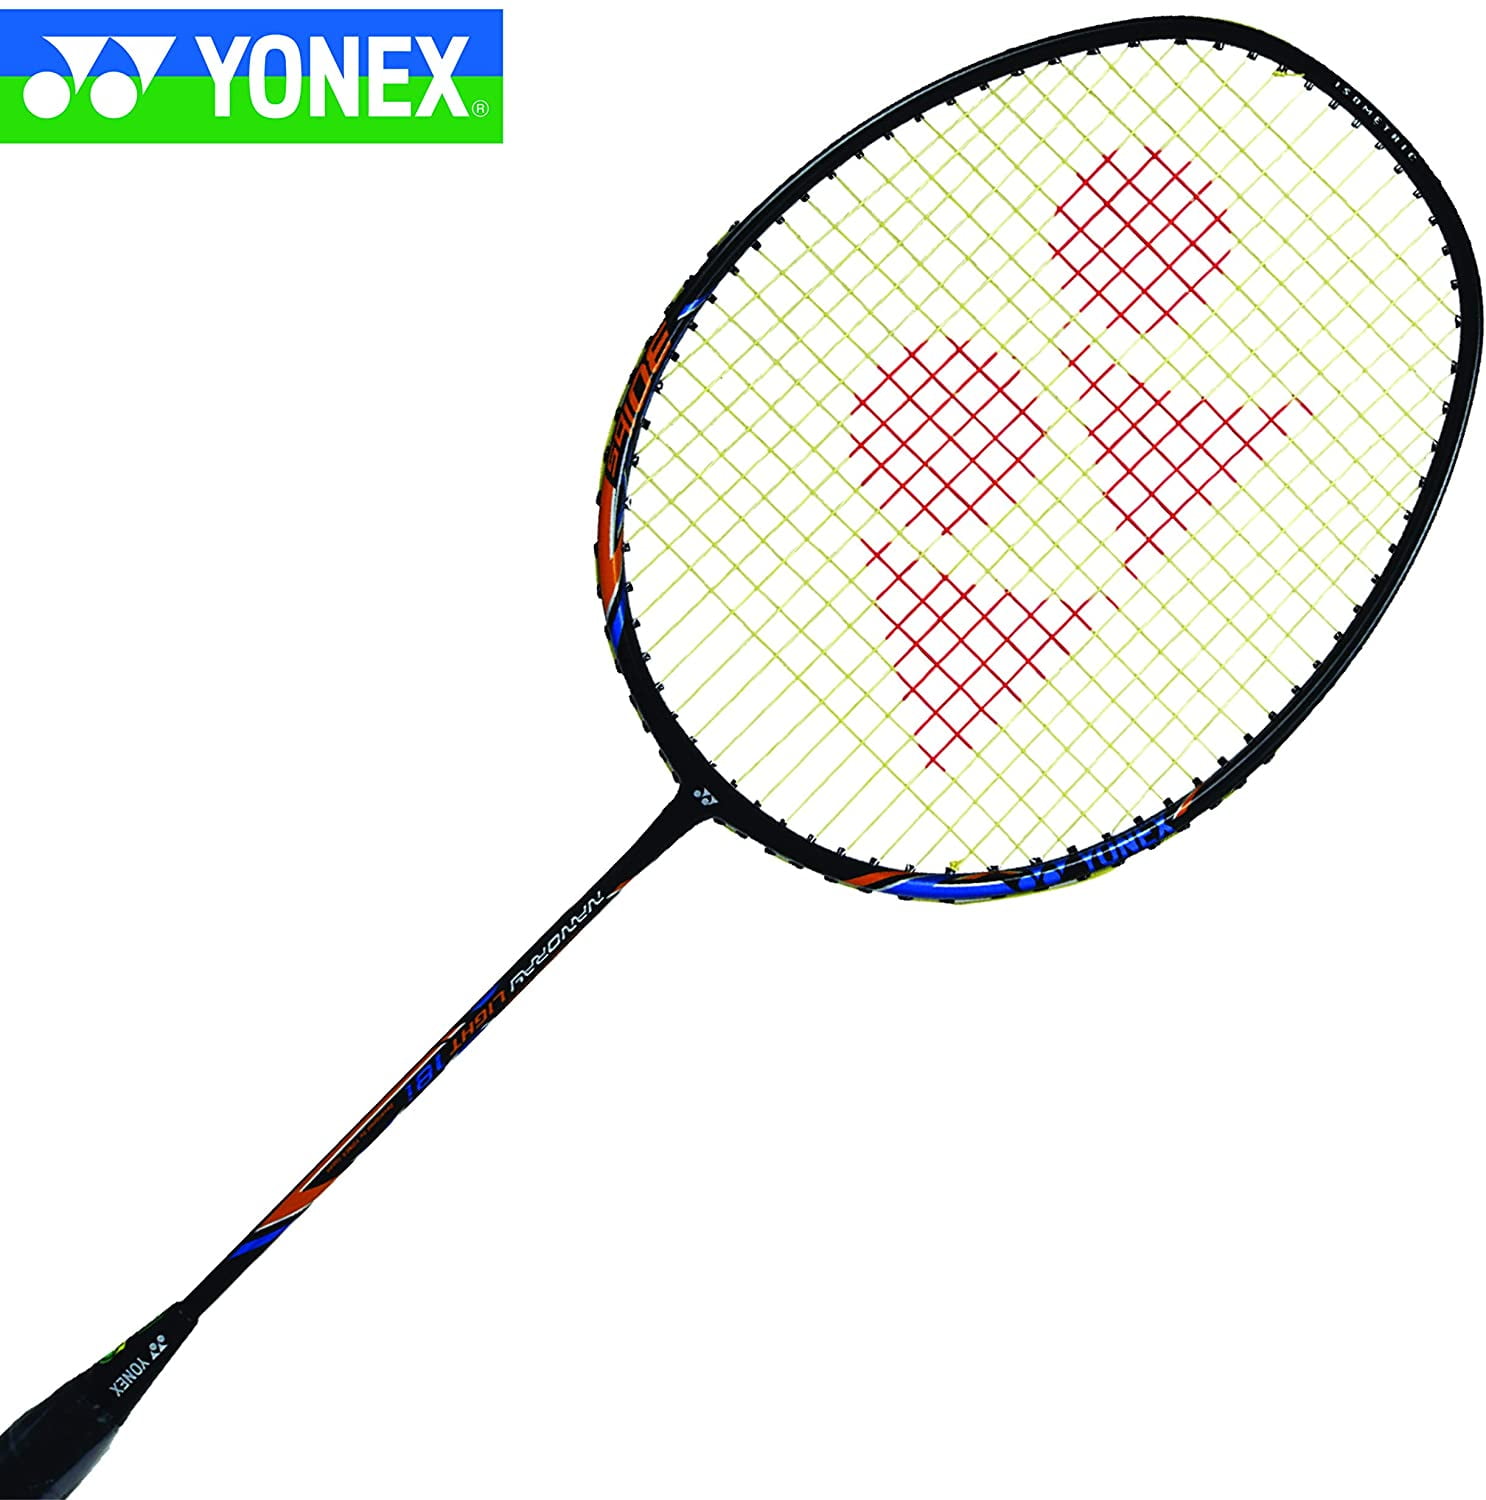 Yonex Nanoray Light 18i Graphite Badminton Racquet 77g, 30 lbs Tension 